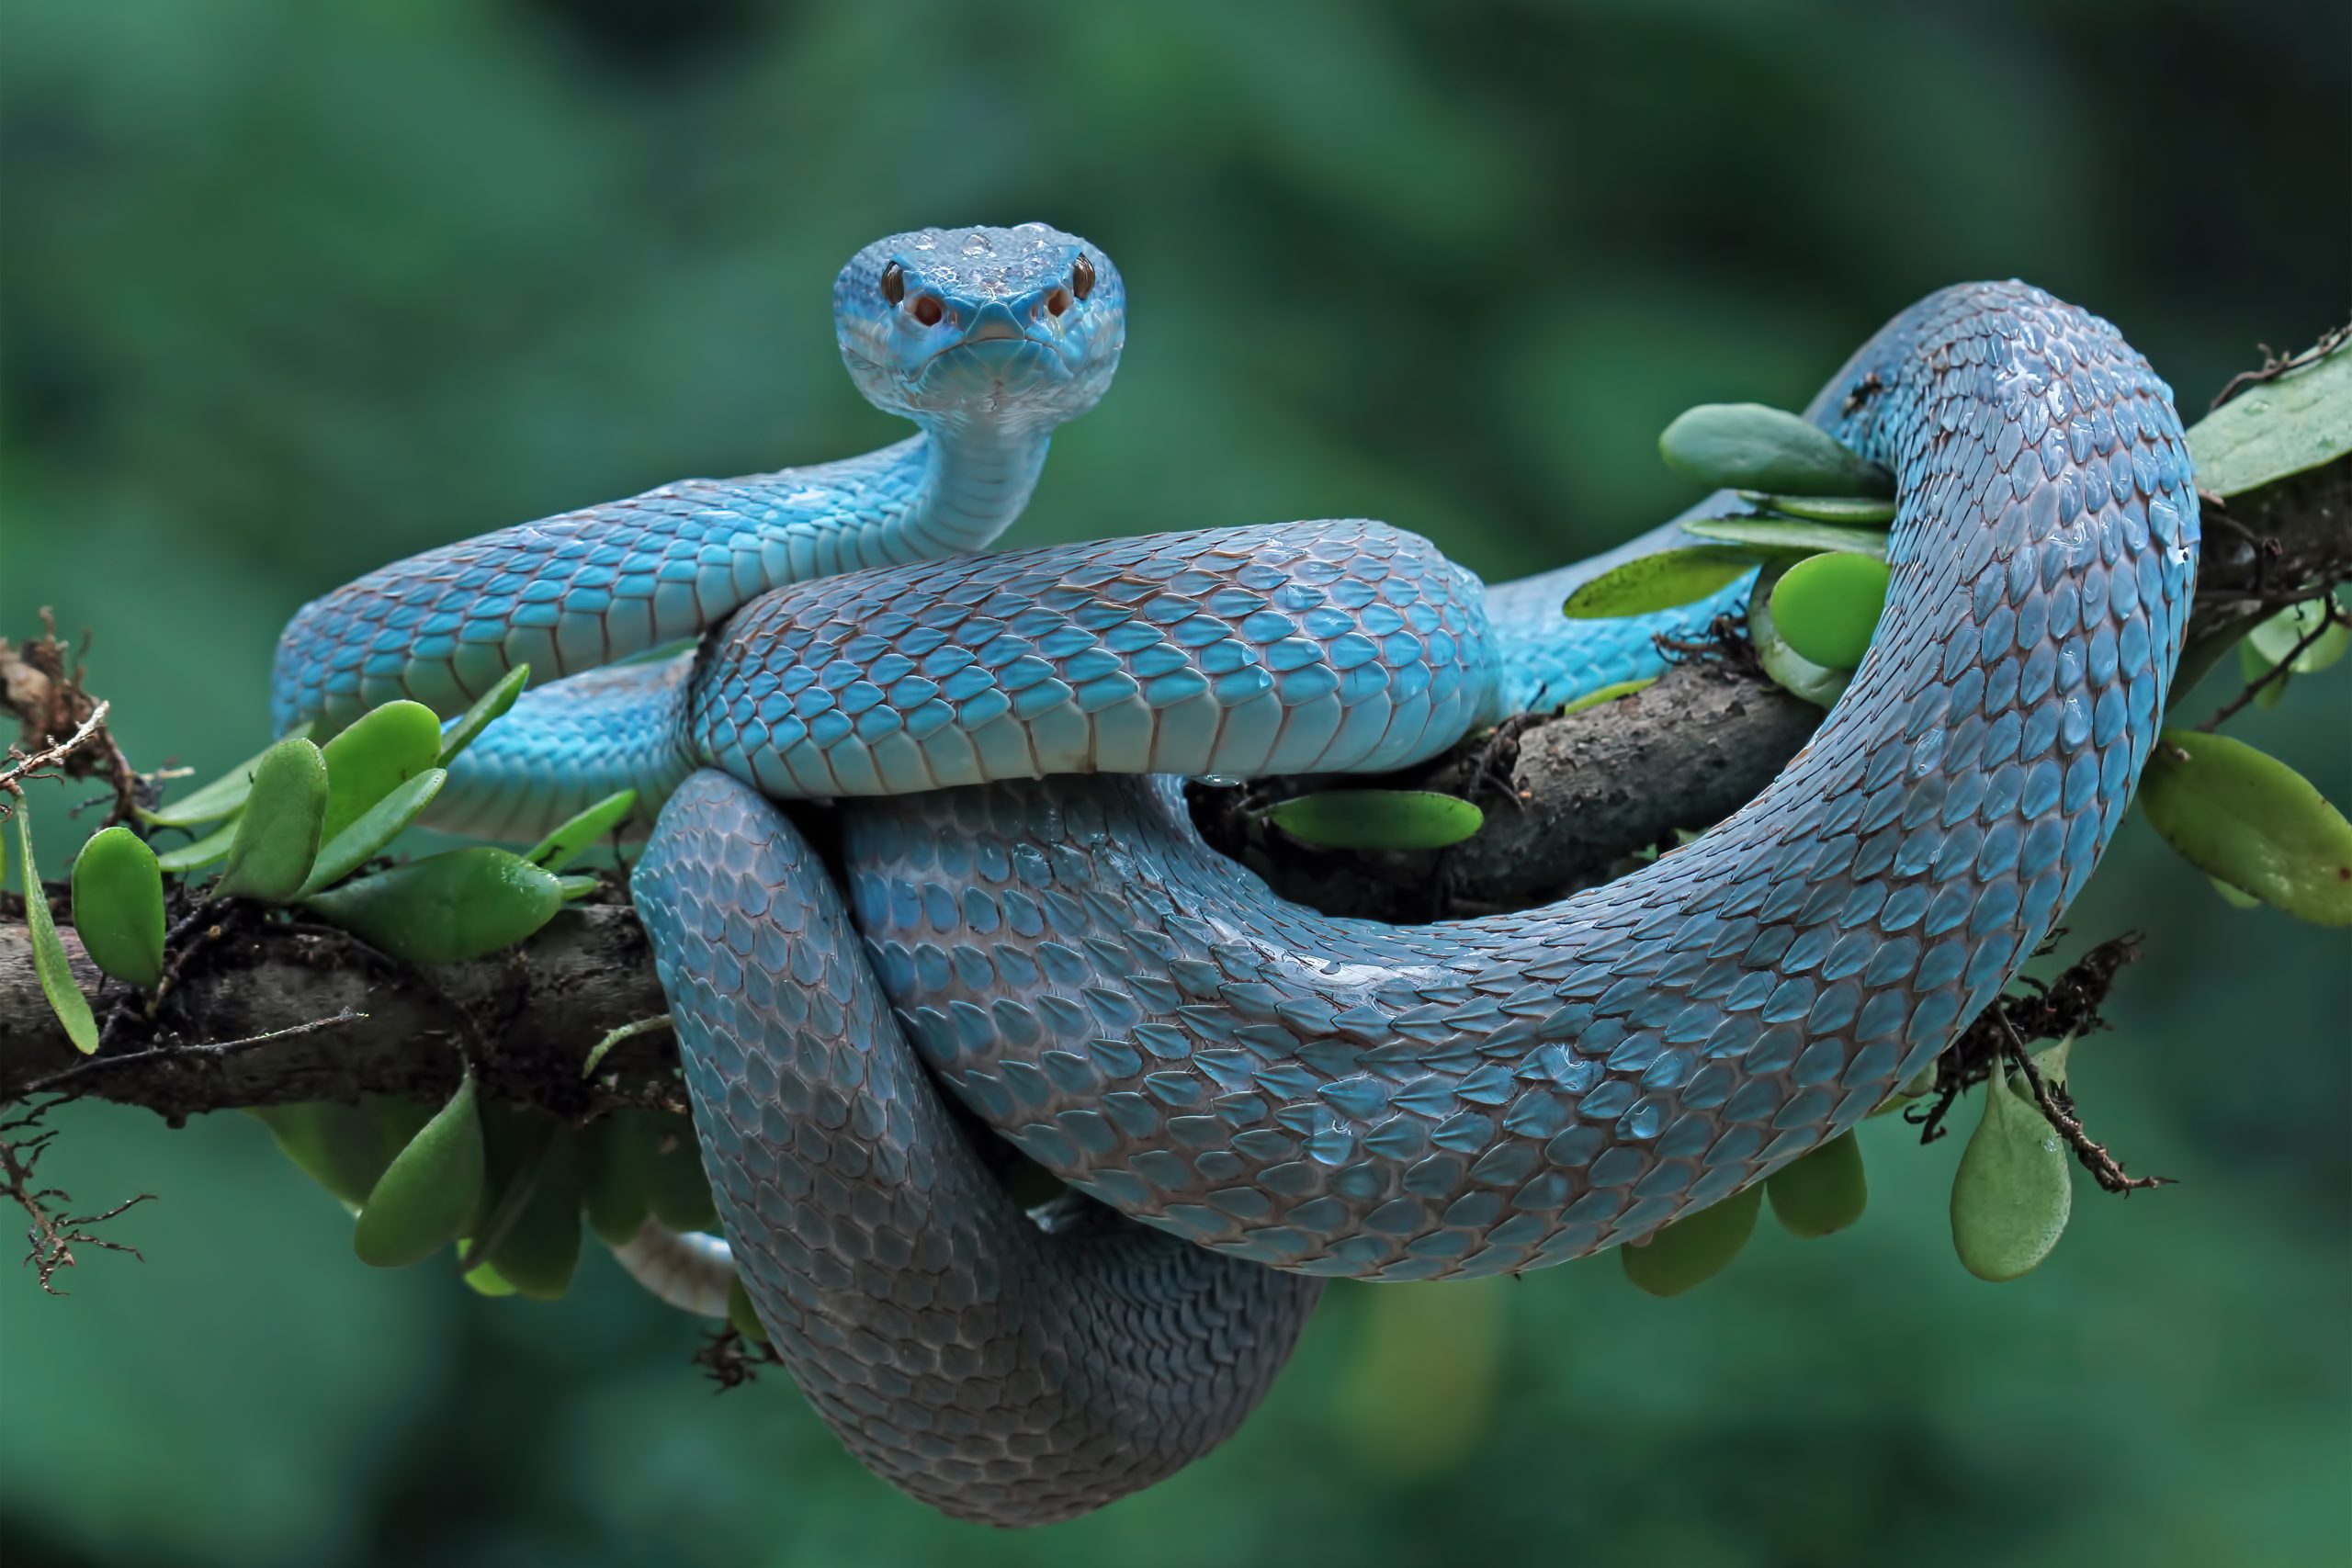 Are green tree pythons venomous?